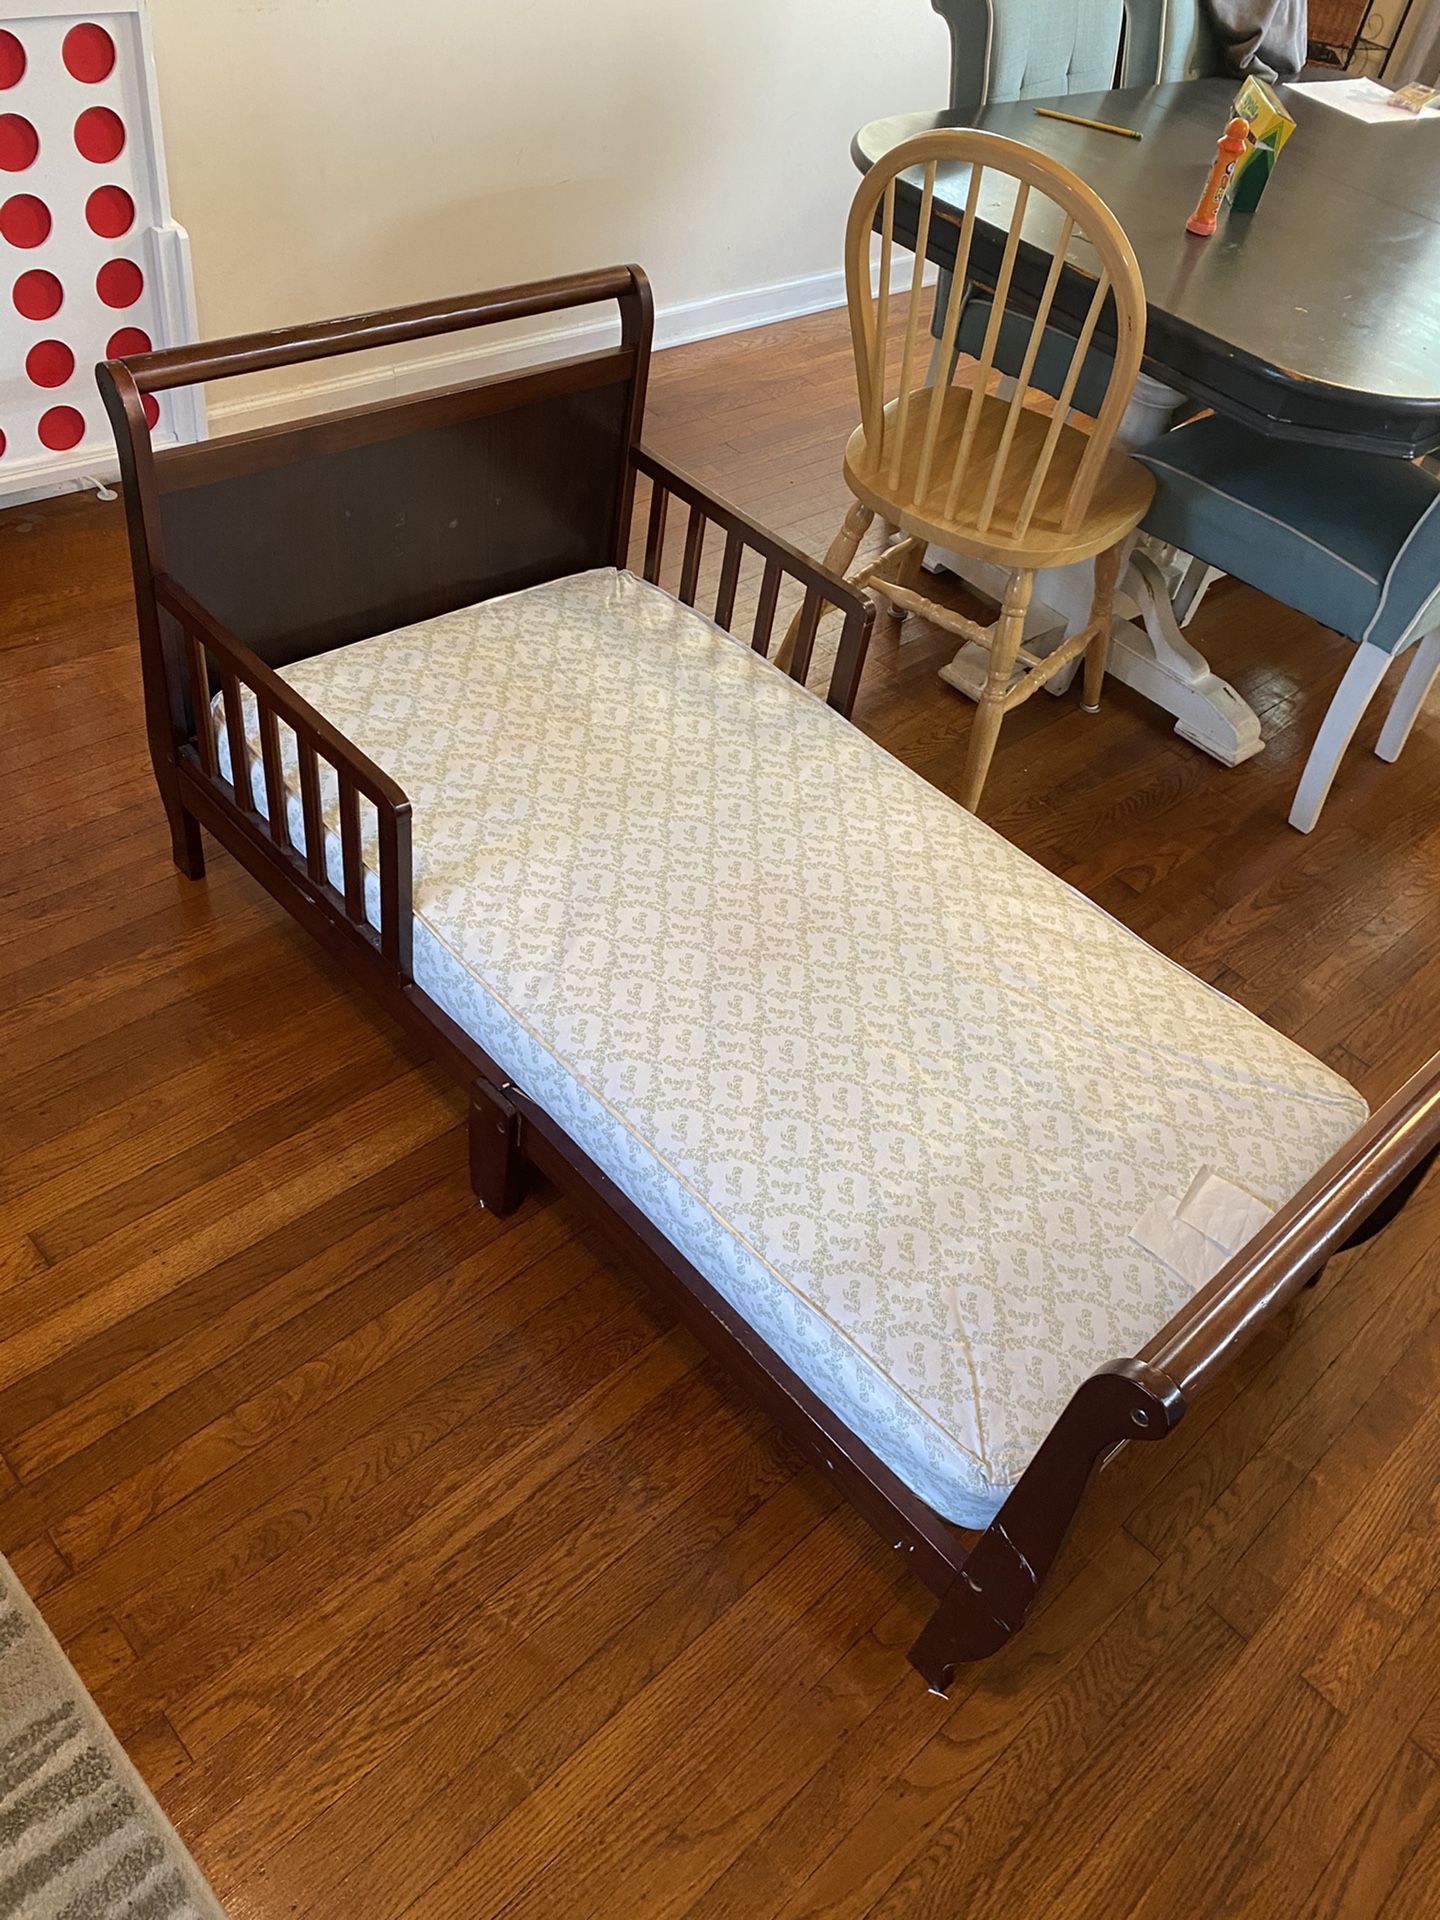 Kids bed and mattress $50